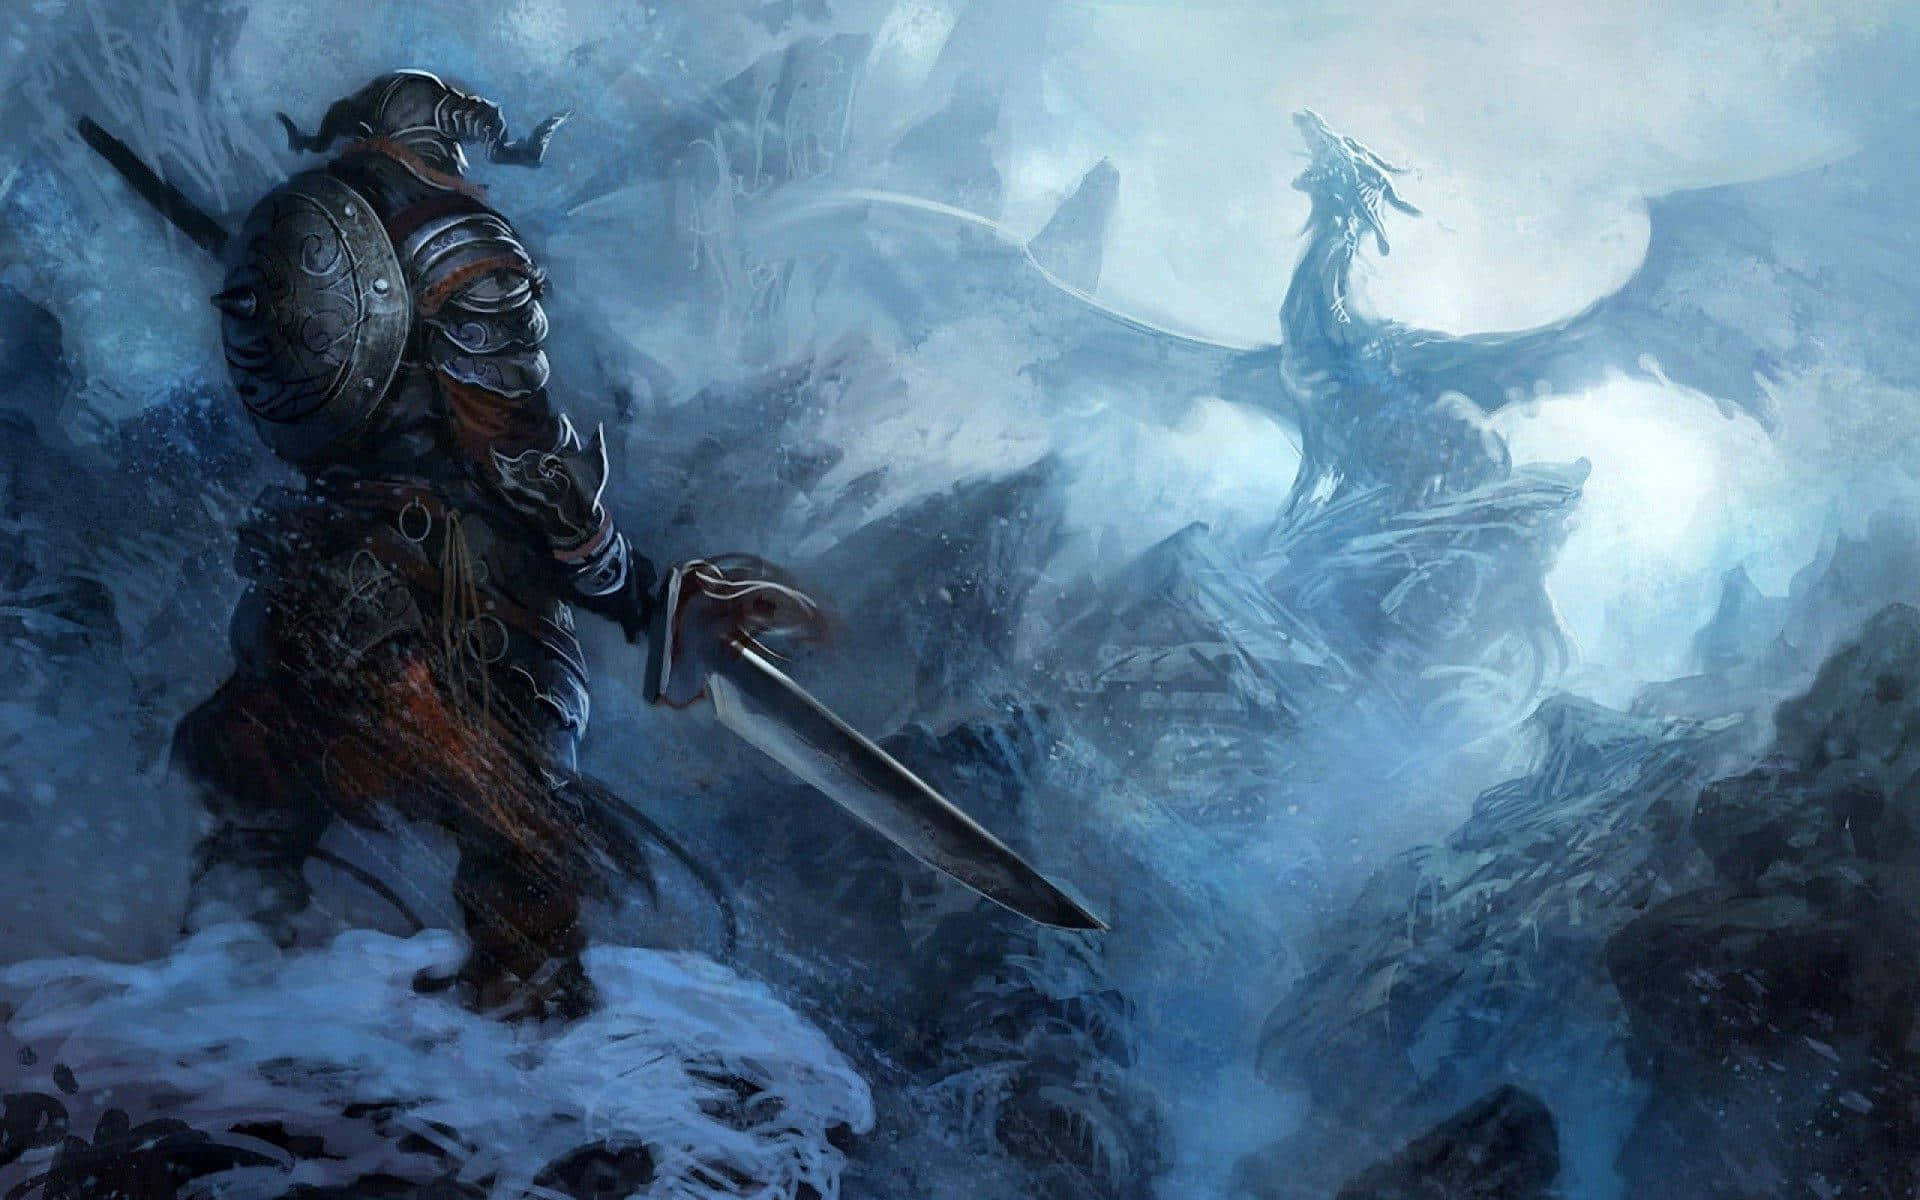 Skyrim Landscape with Dragon and Adventurer